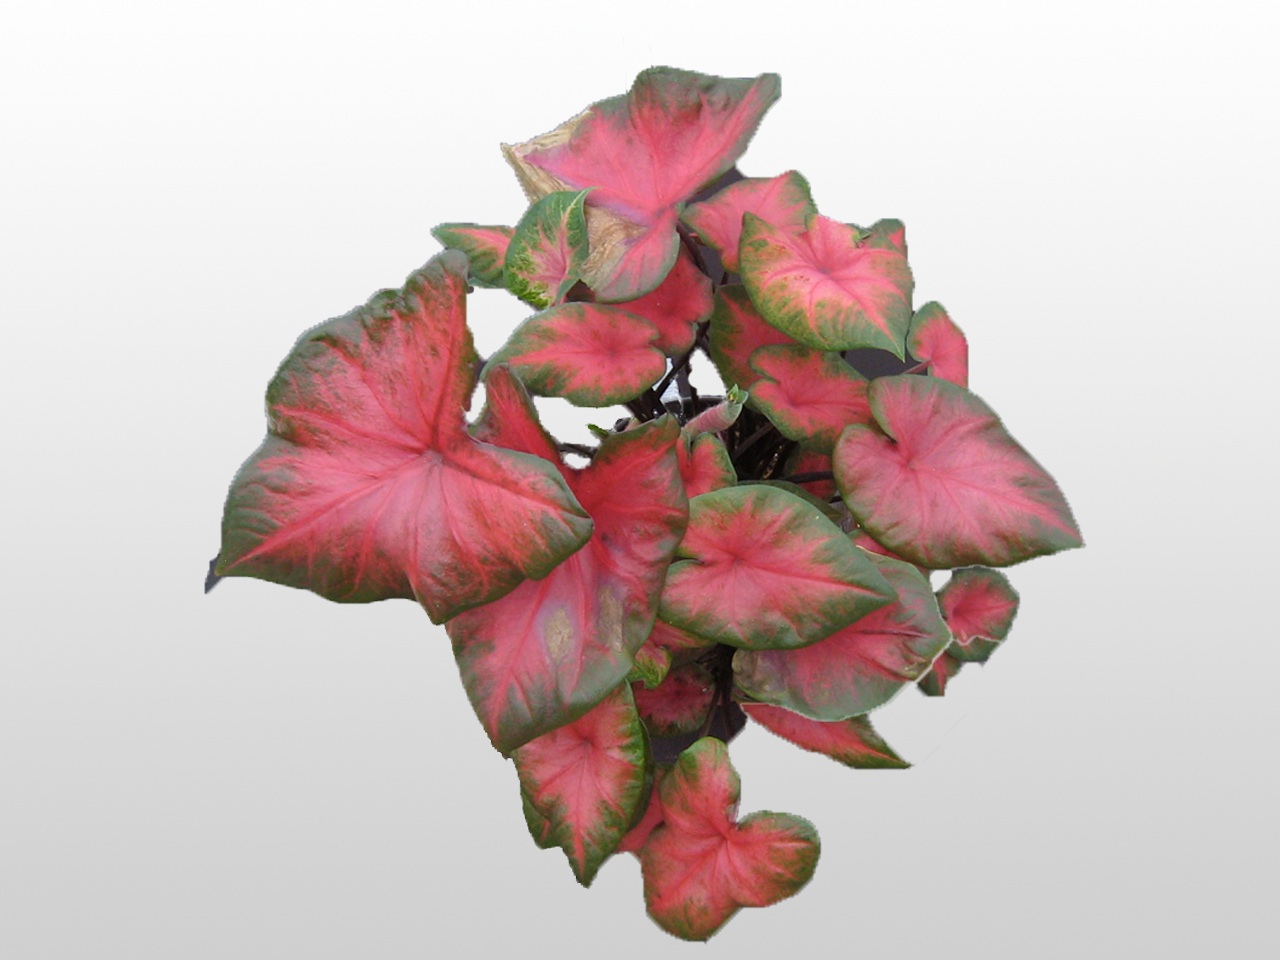 Pink and green Caladium Plant